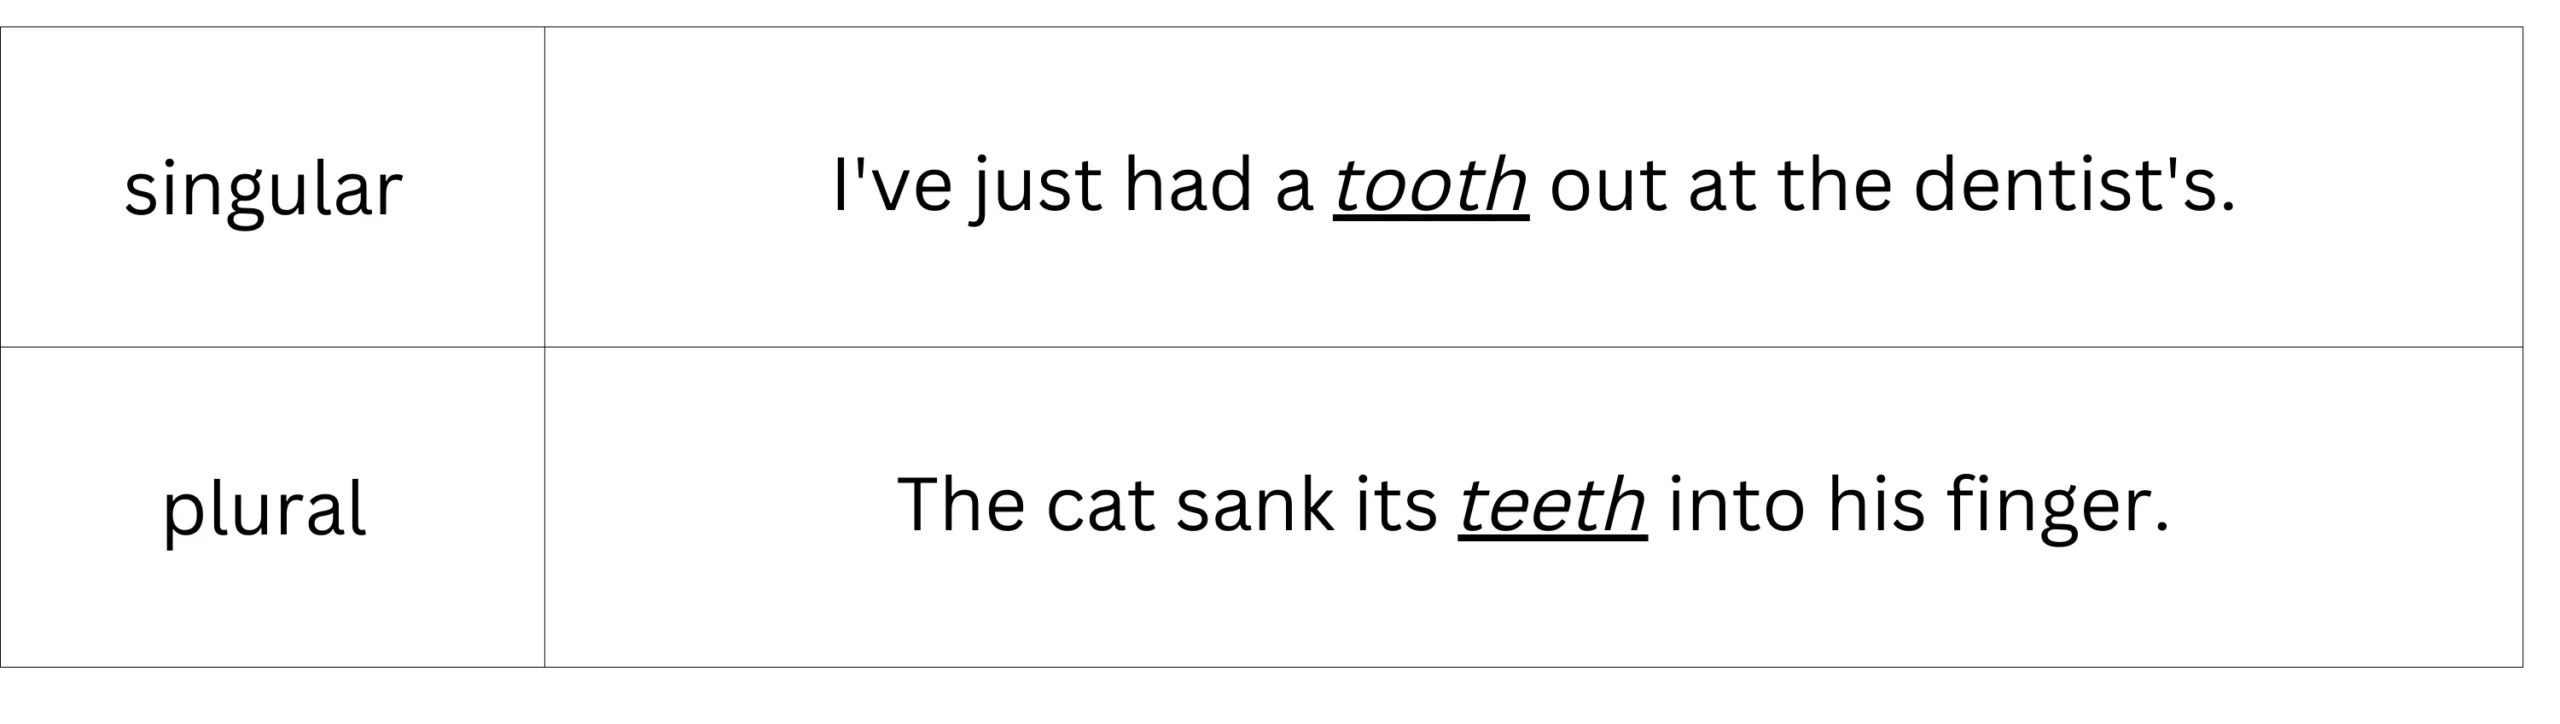 Tooth/teeth (singular and plural)